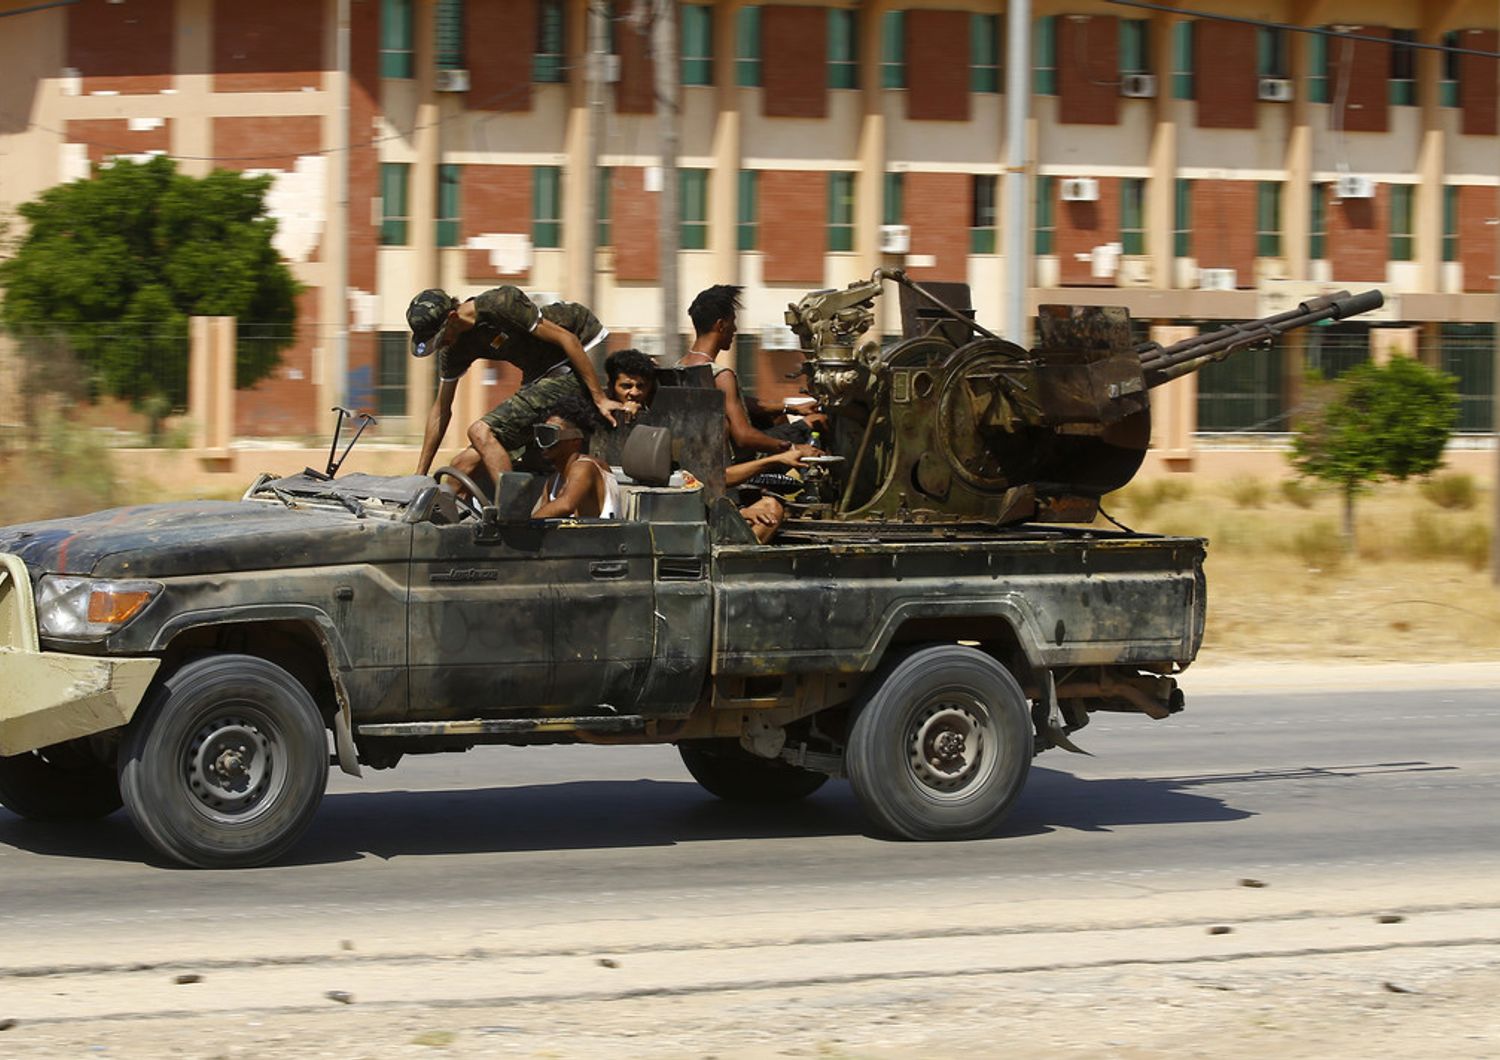 Forze militari in Libia